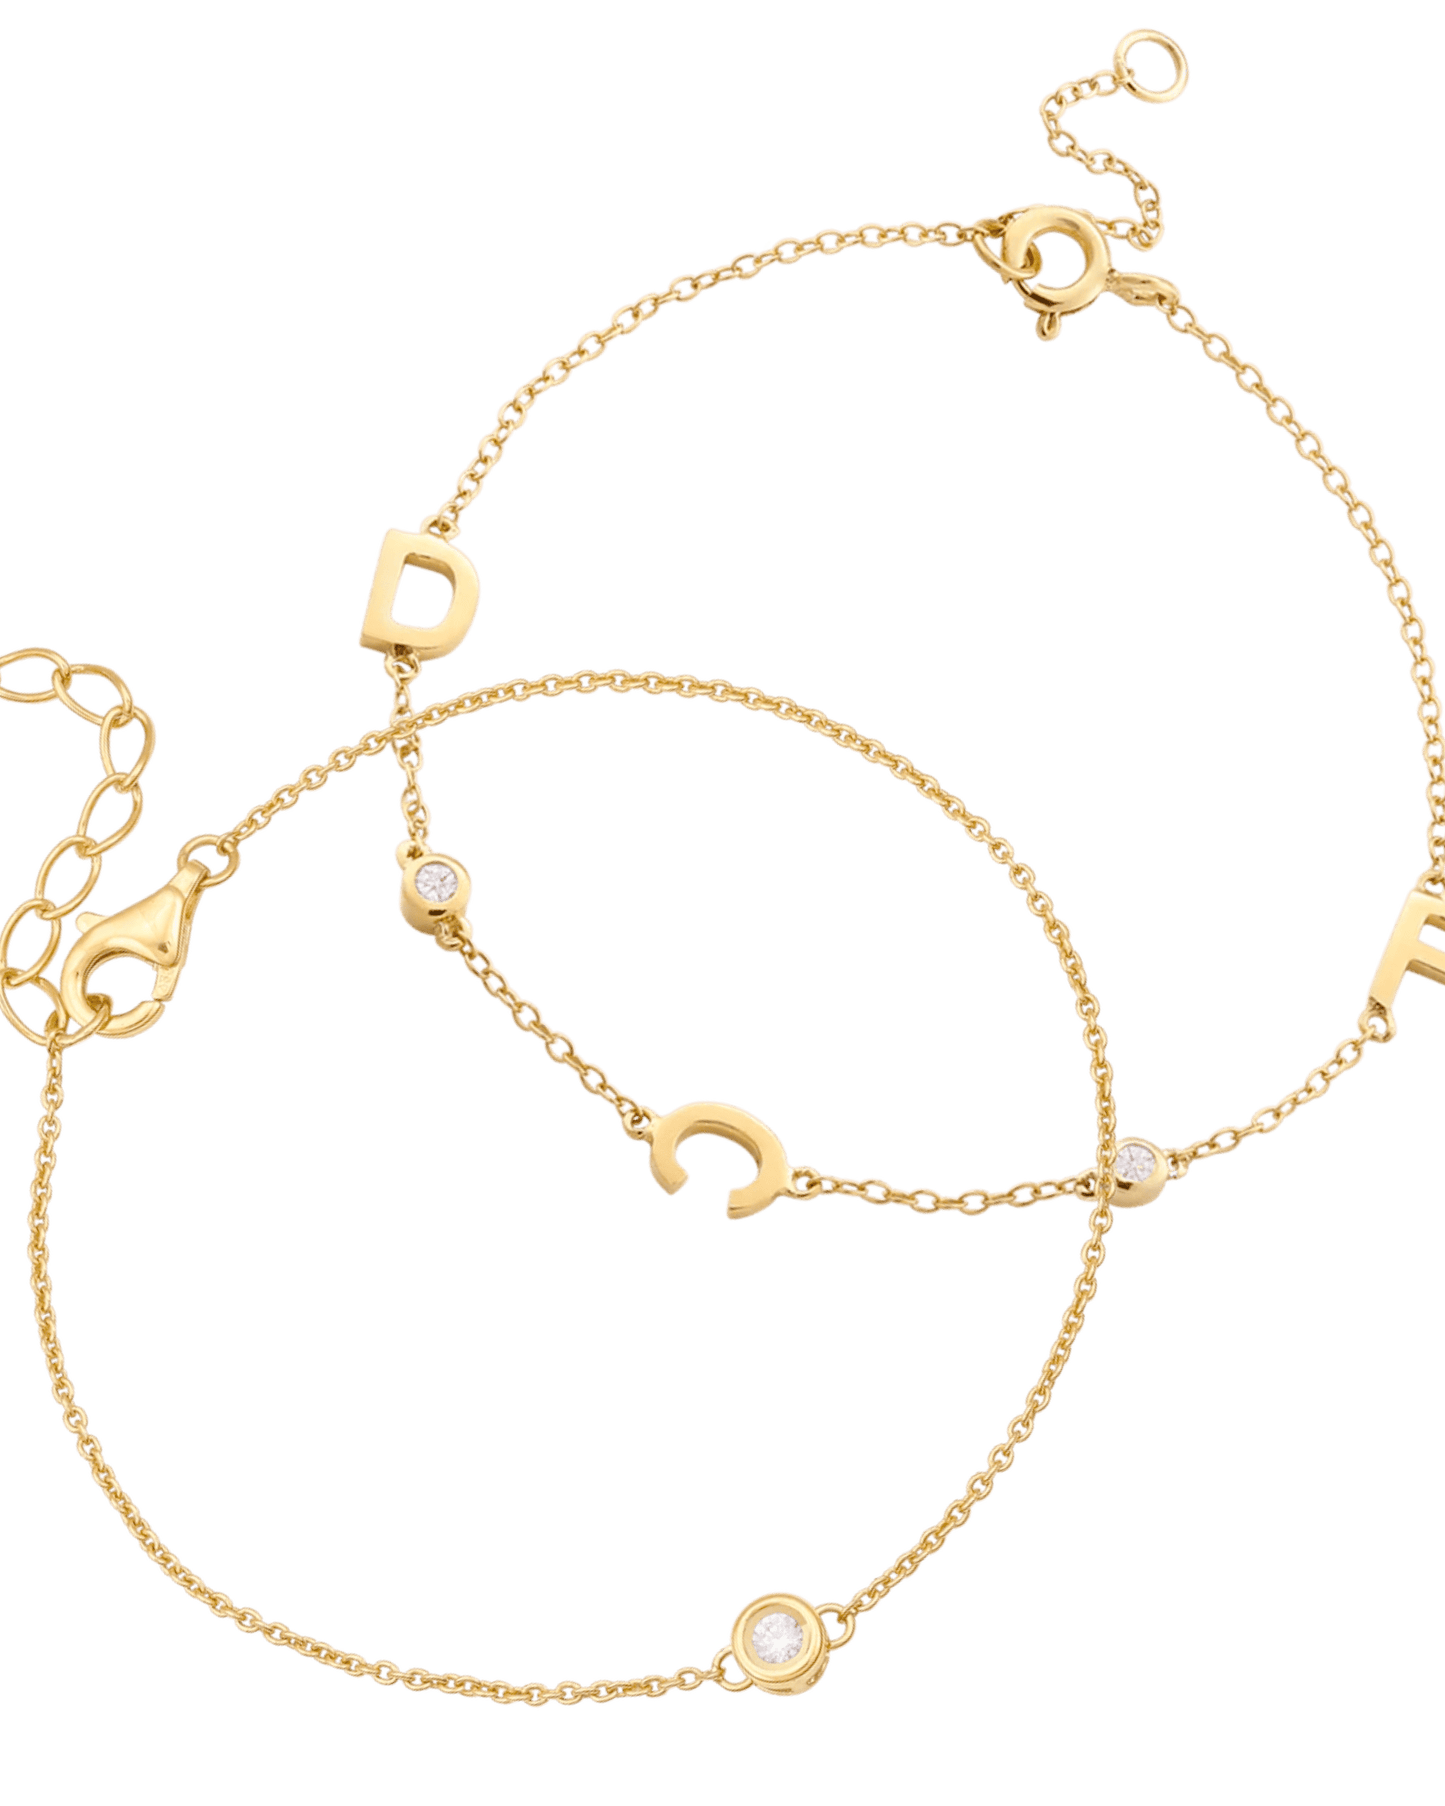 Set of Initial Bracelet with Diamonds & Chain of Love Bracelets - 14K White Gold Bracelets magal-dev 